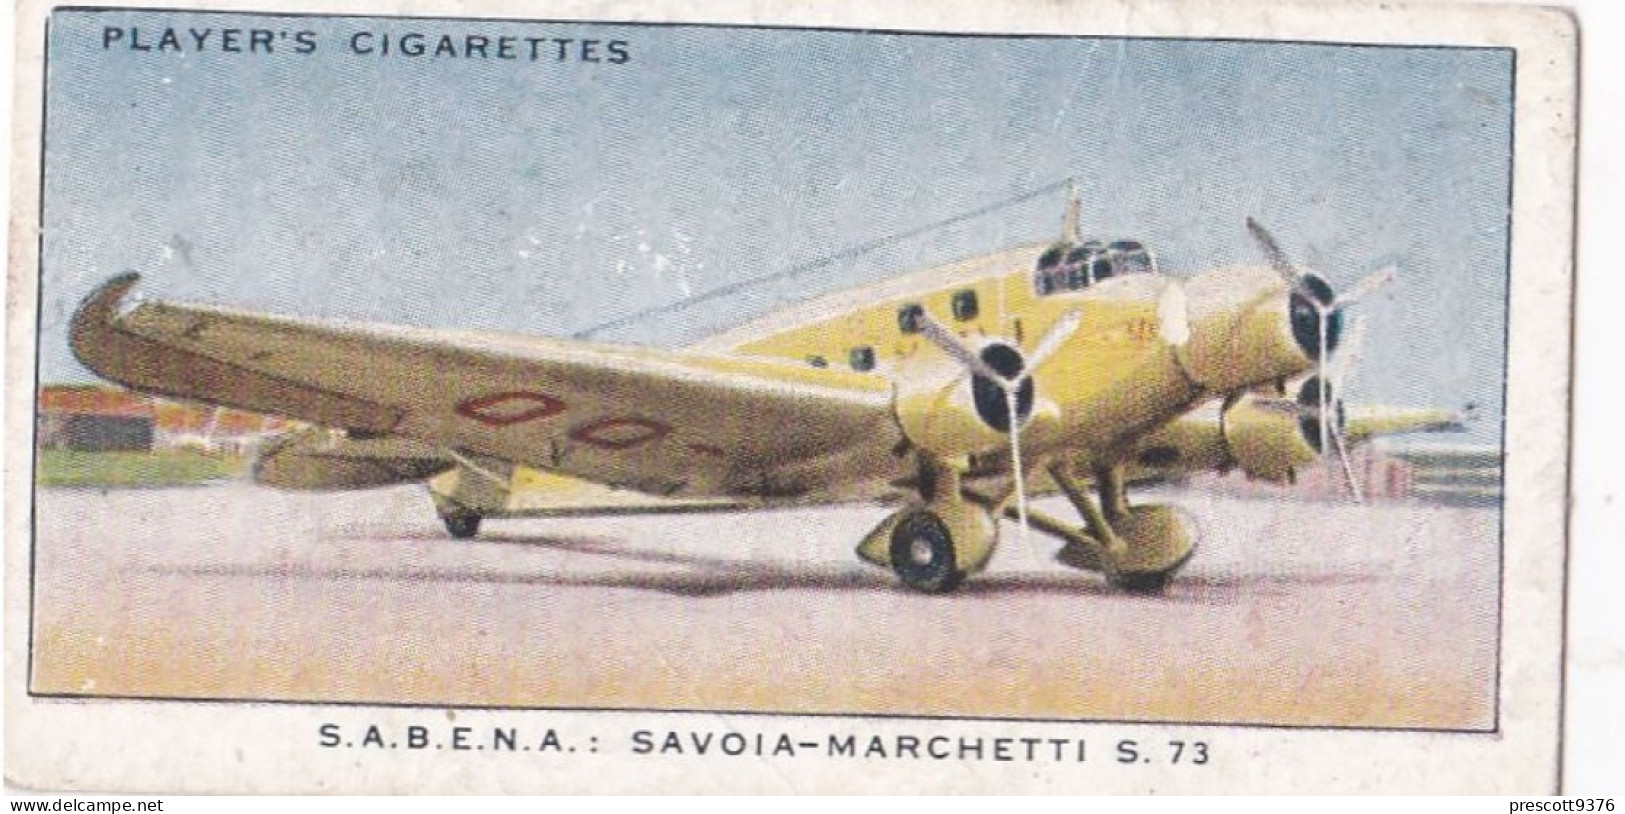 10 Sabena Savoia Marchetti S23 - International Air Liners 1937 - Players Cigarette Card - Original - Aeroplanes - Player's